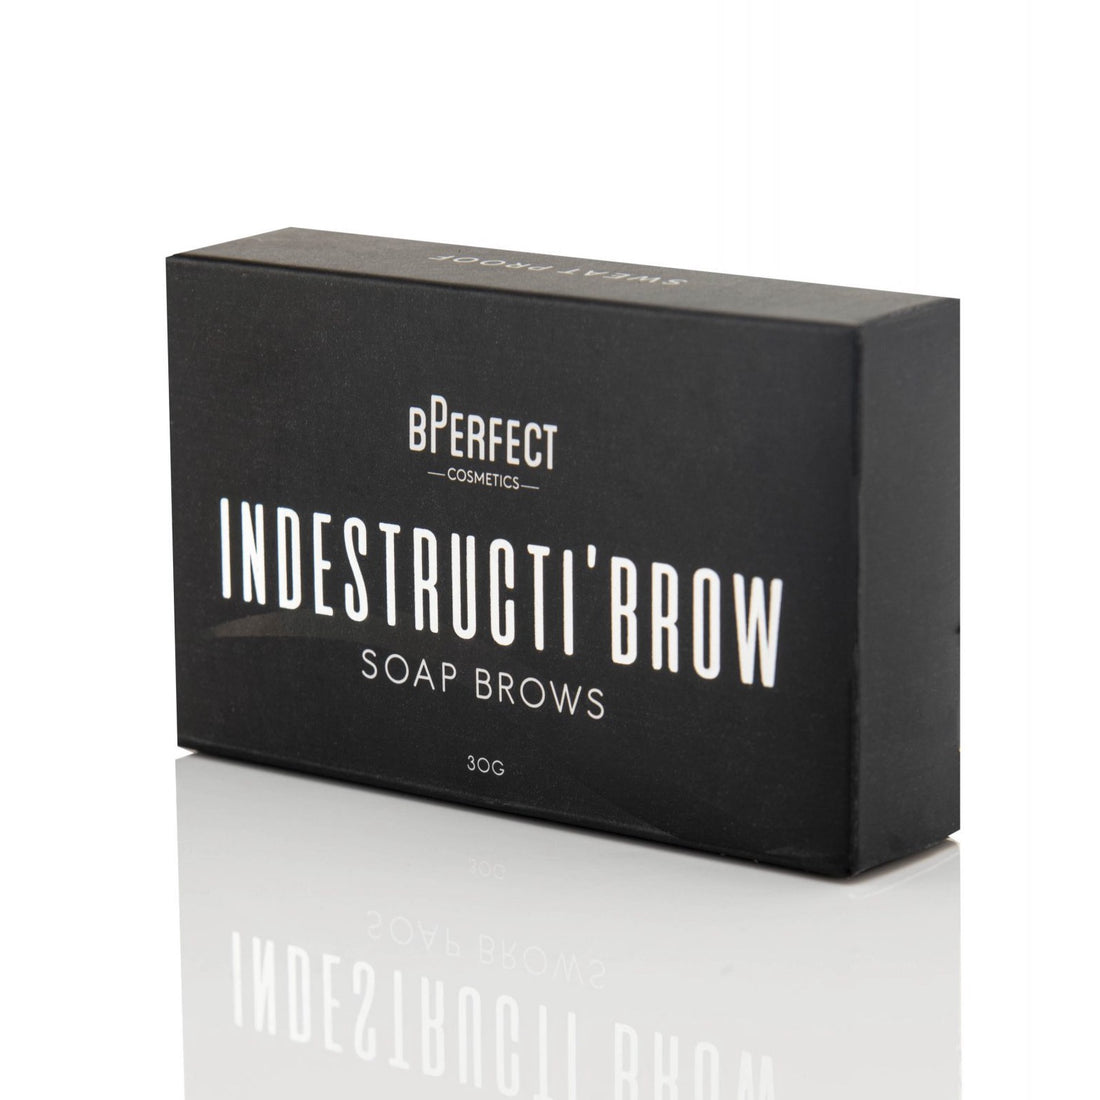 bPerfect INDESTRUCTI’BROW SOAP BROWS